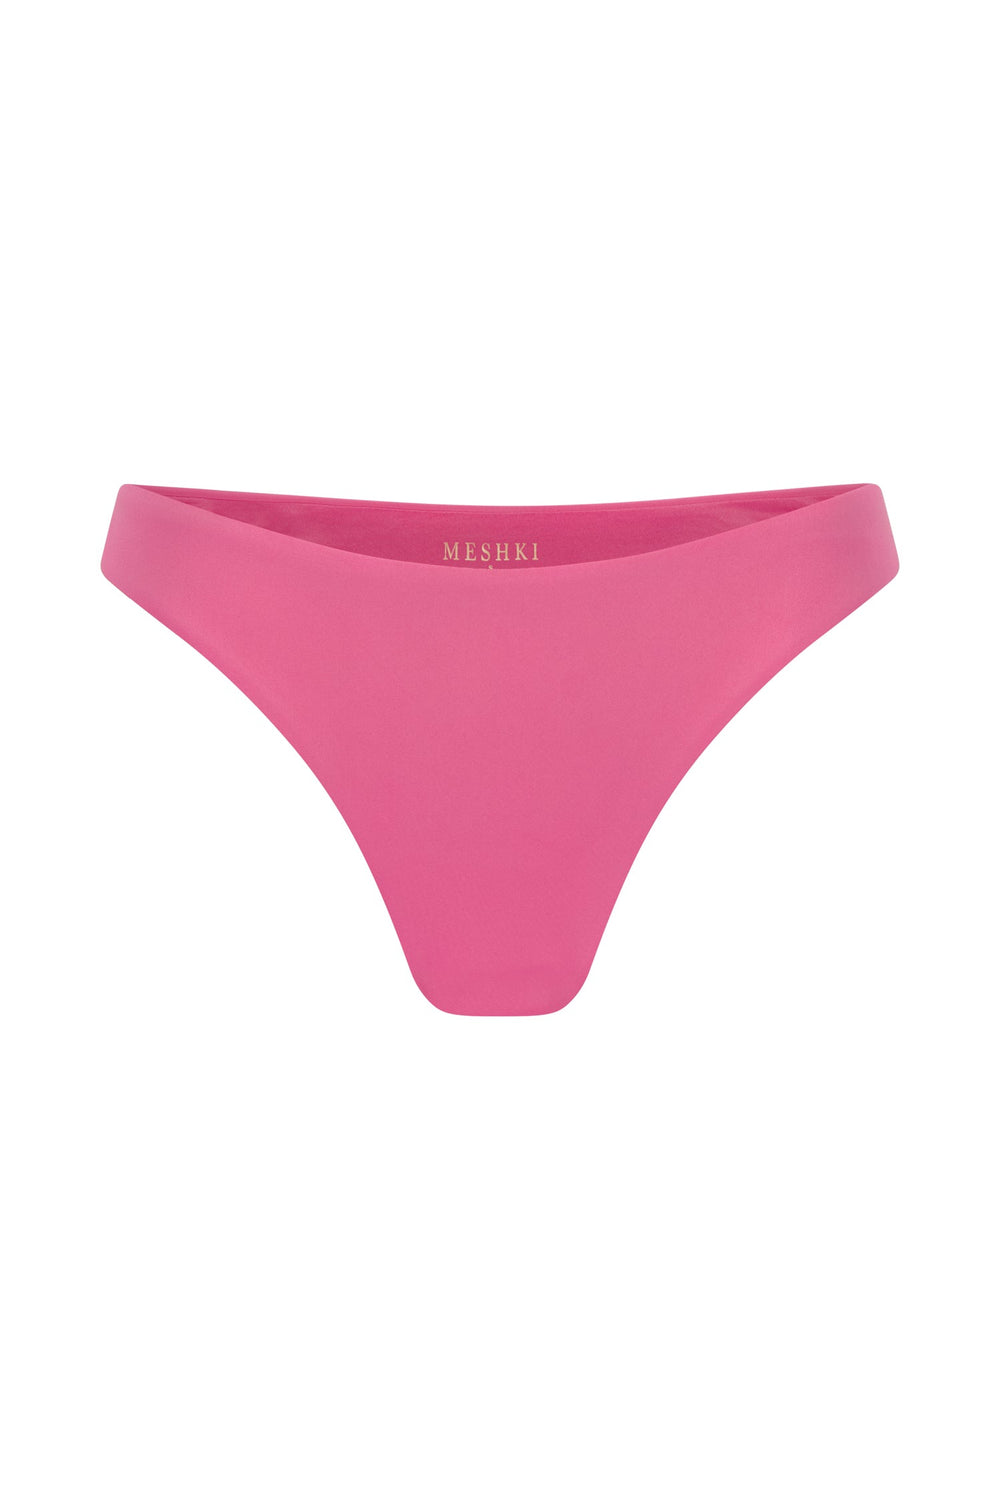 Rosie Recycled Nylon Cheeky Cut Bikini Bottoms - Pink